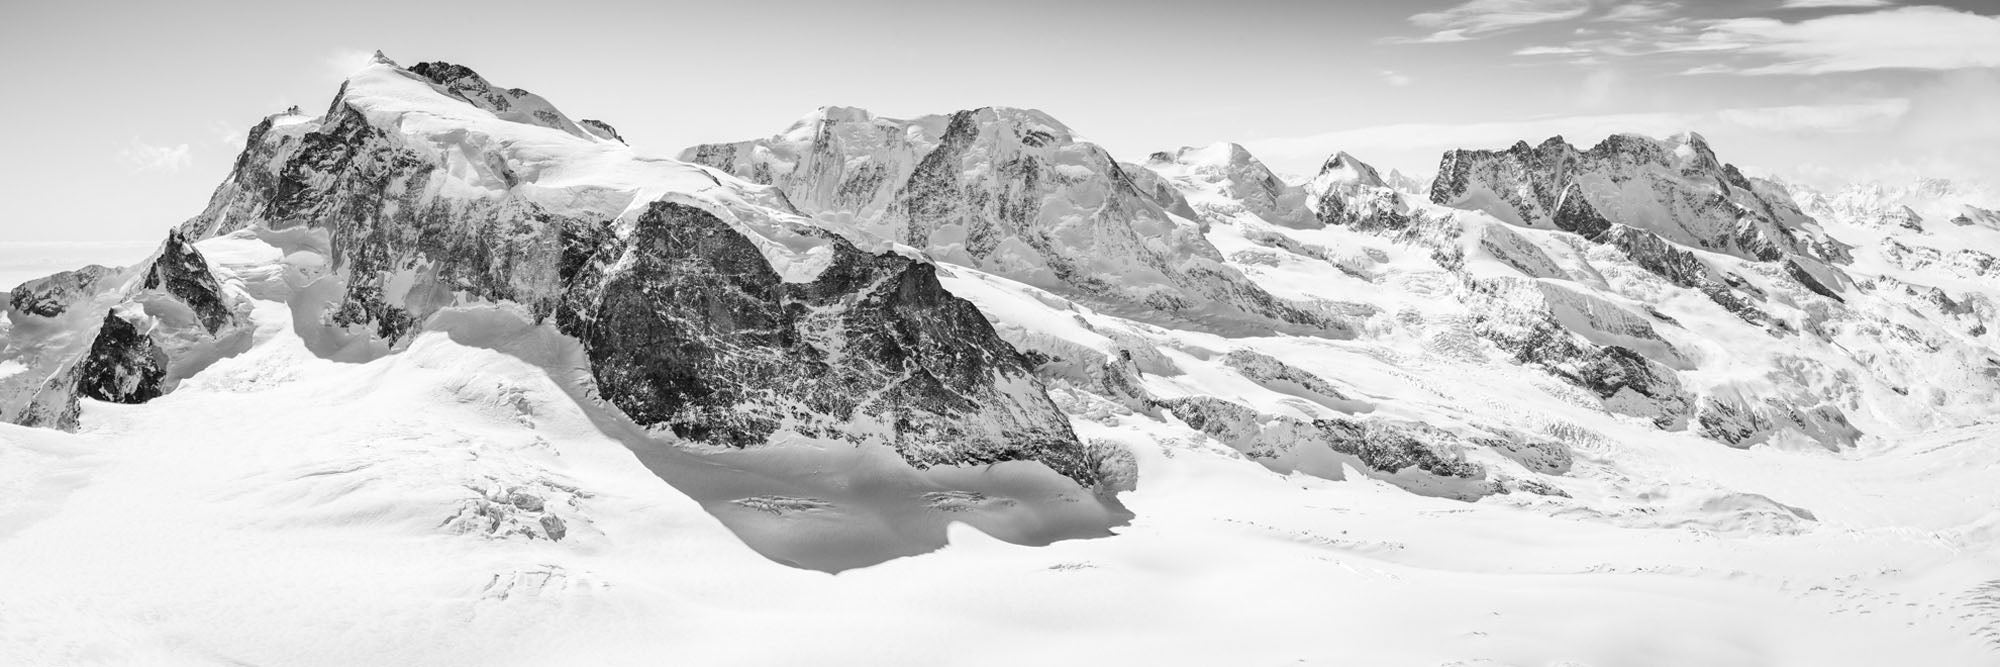 Giants of Zermatt, Panorama, Switzerland - Petra Gut Contemporary AG Thomas Crauwels